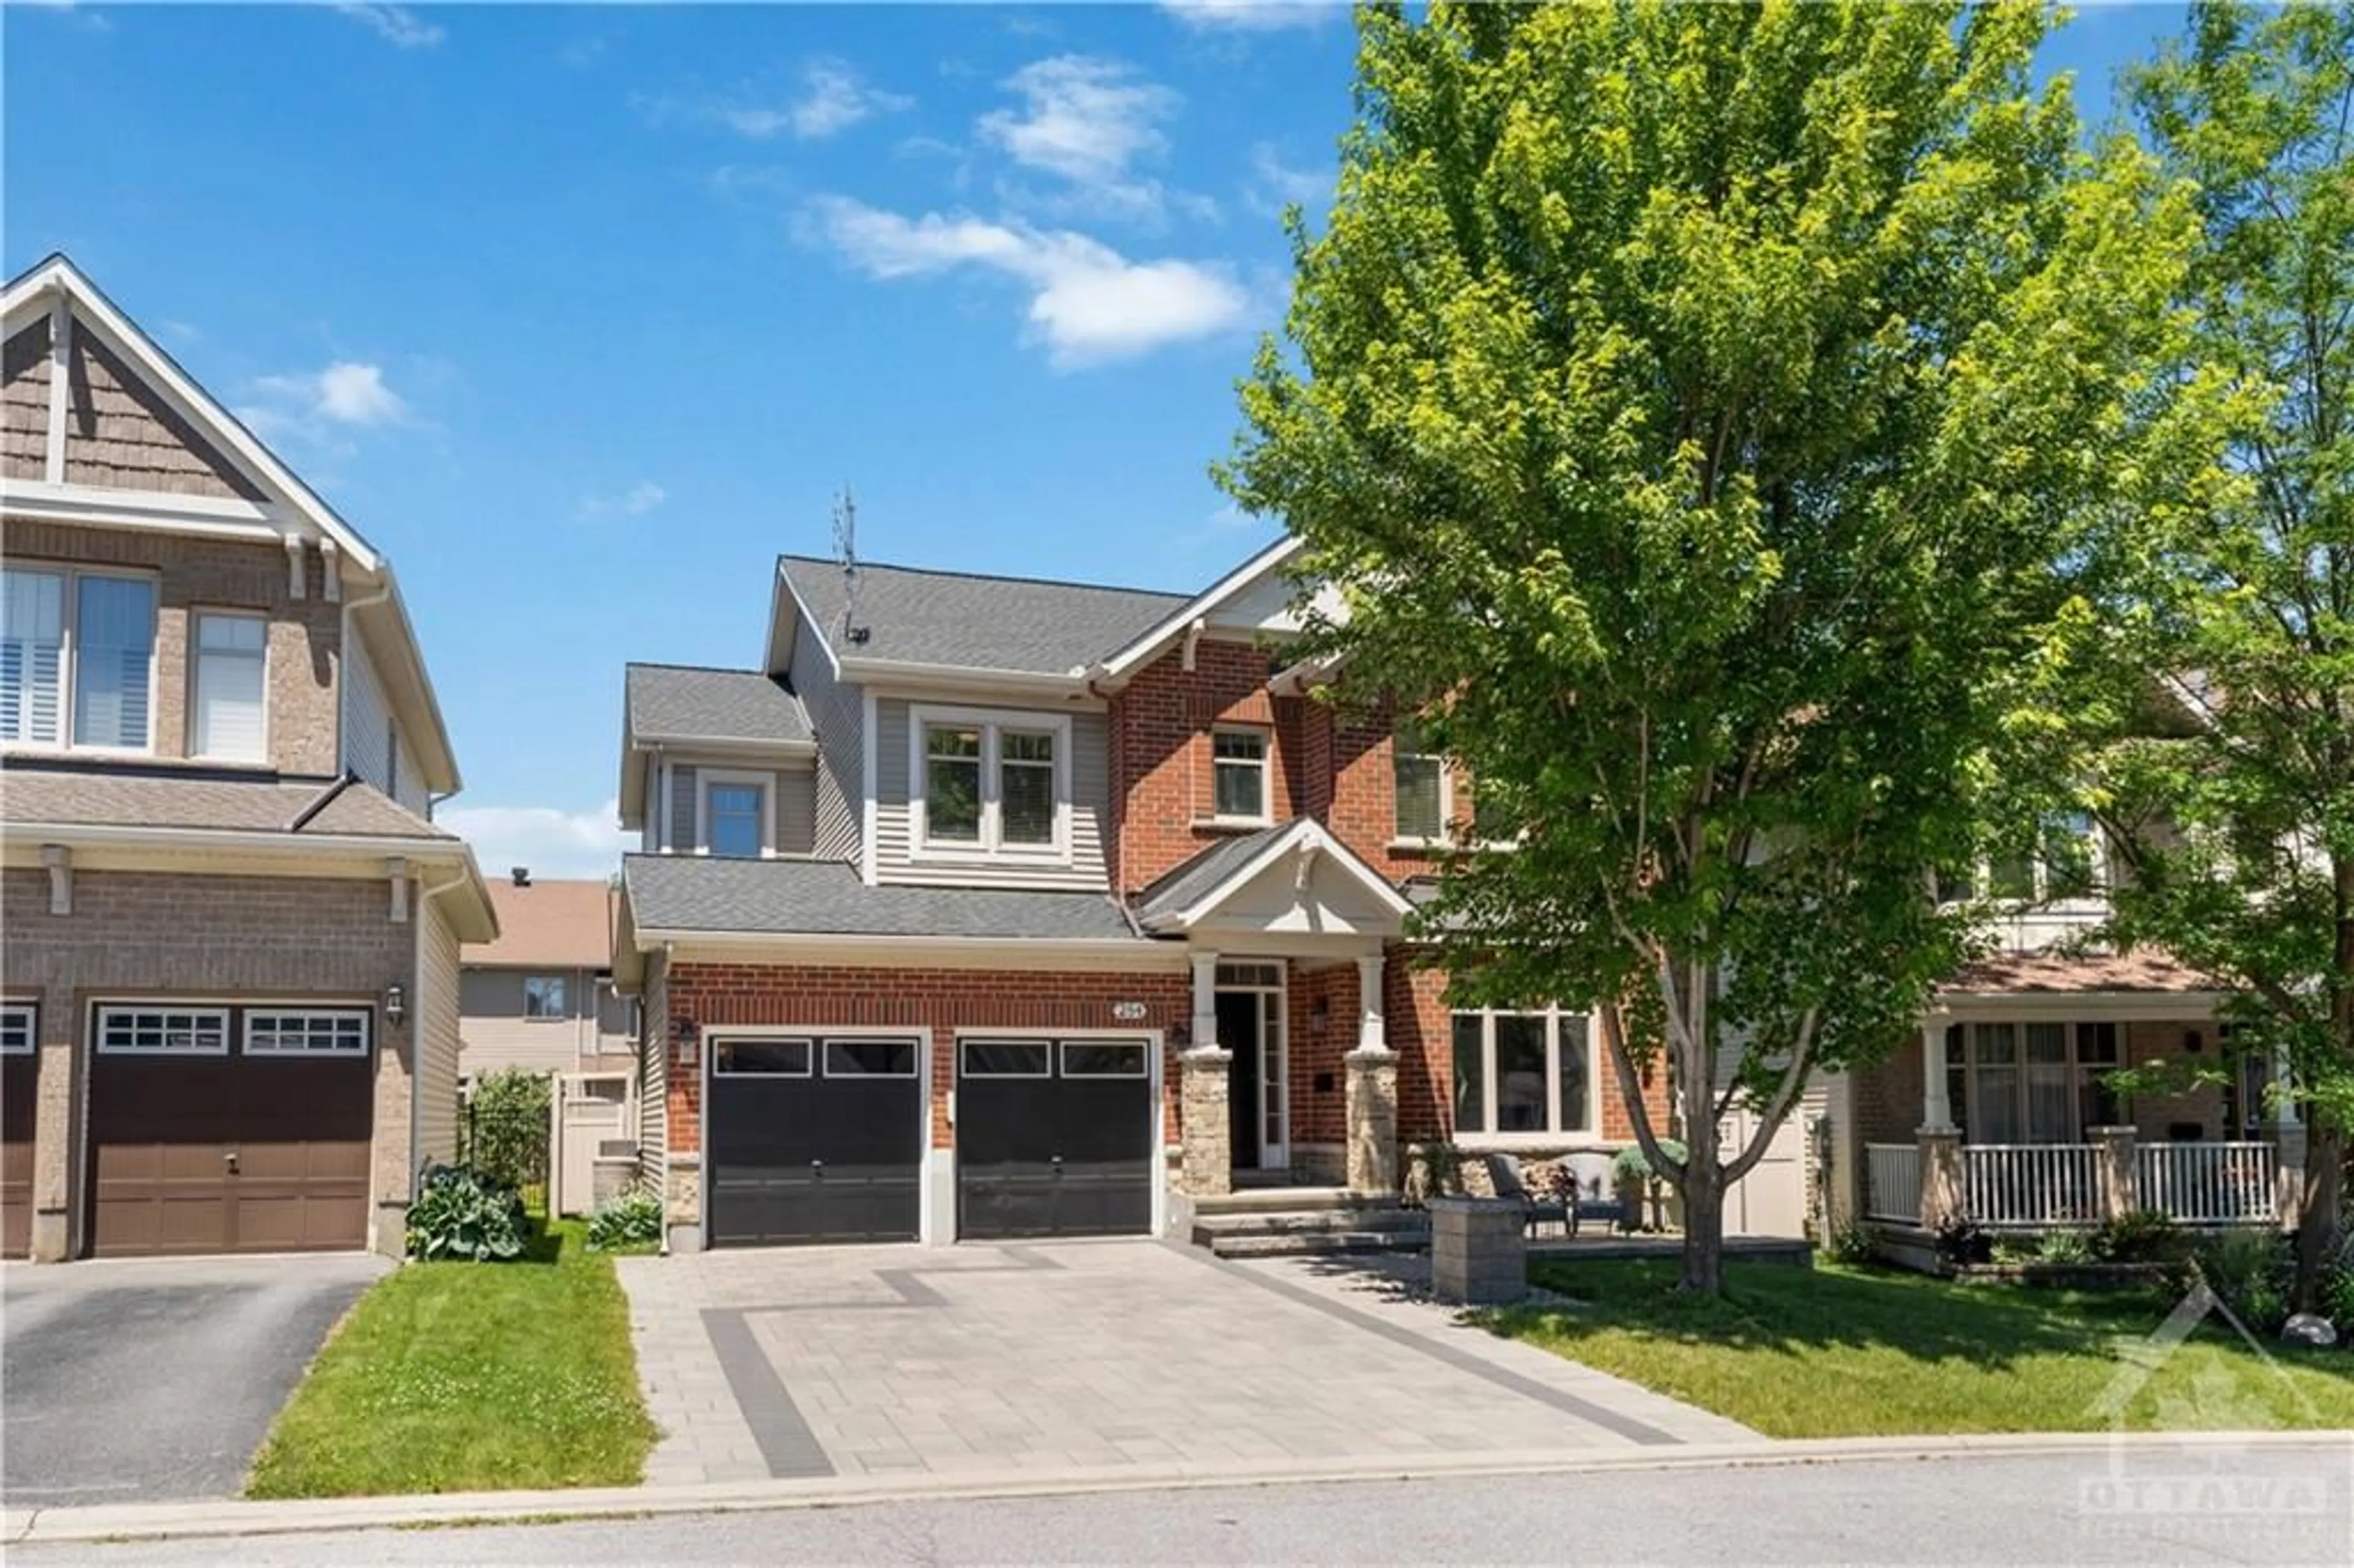 Home with brick exterior material for 284 CALAVERAS Ave, Ottawa Ontario K2J 5K8